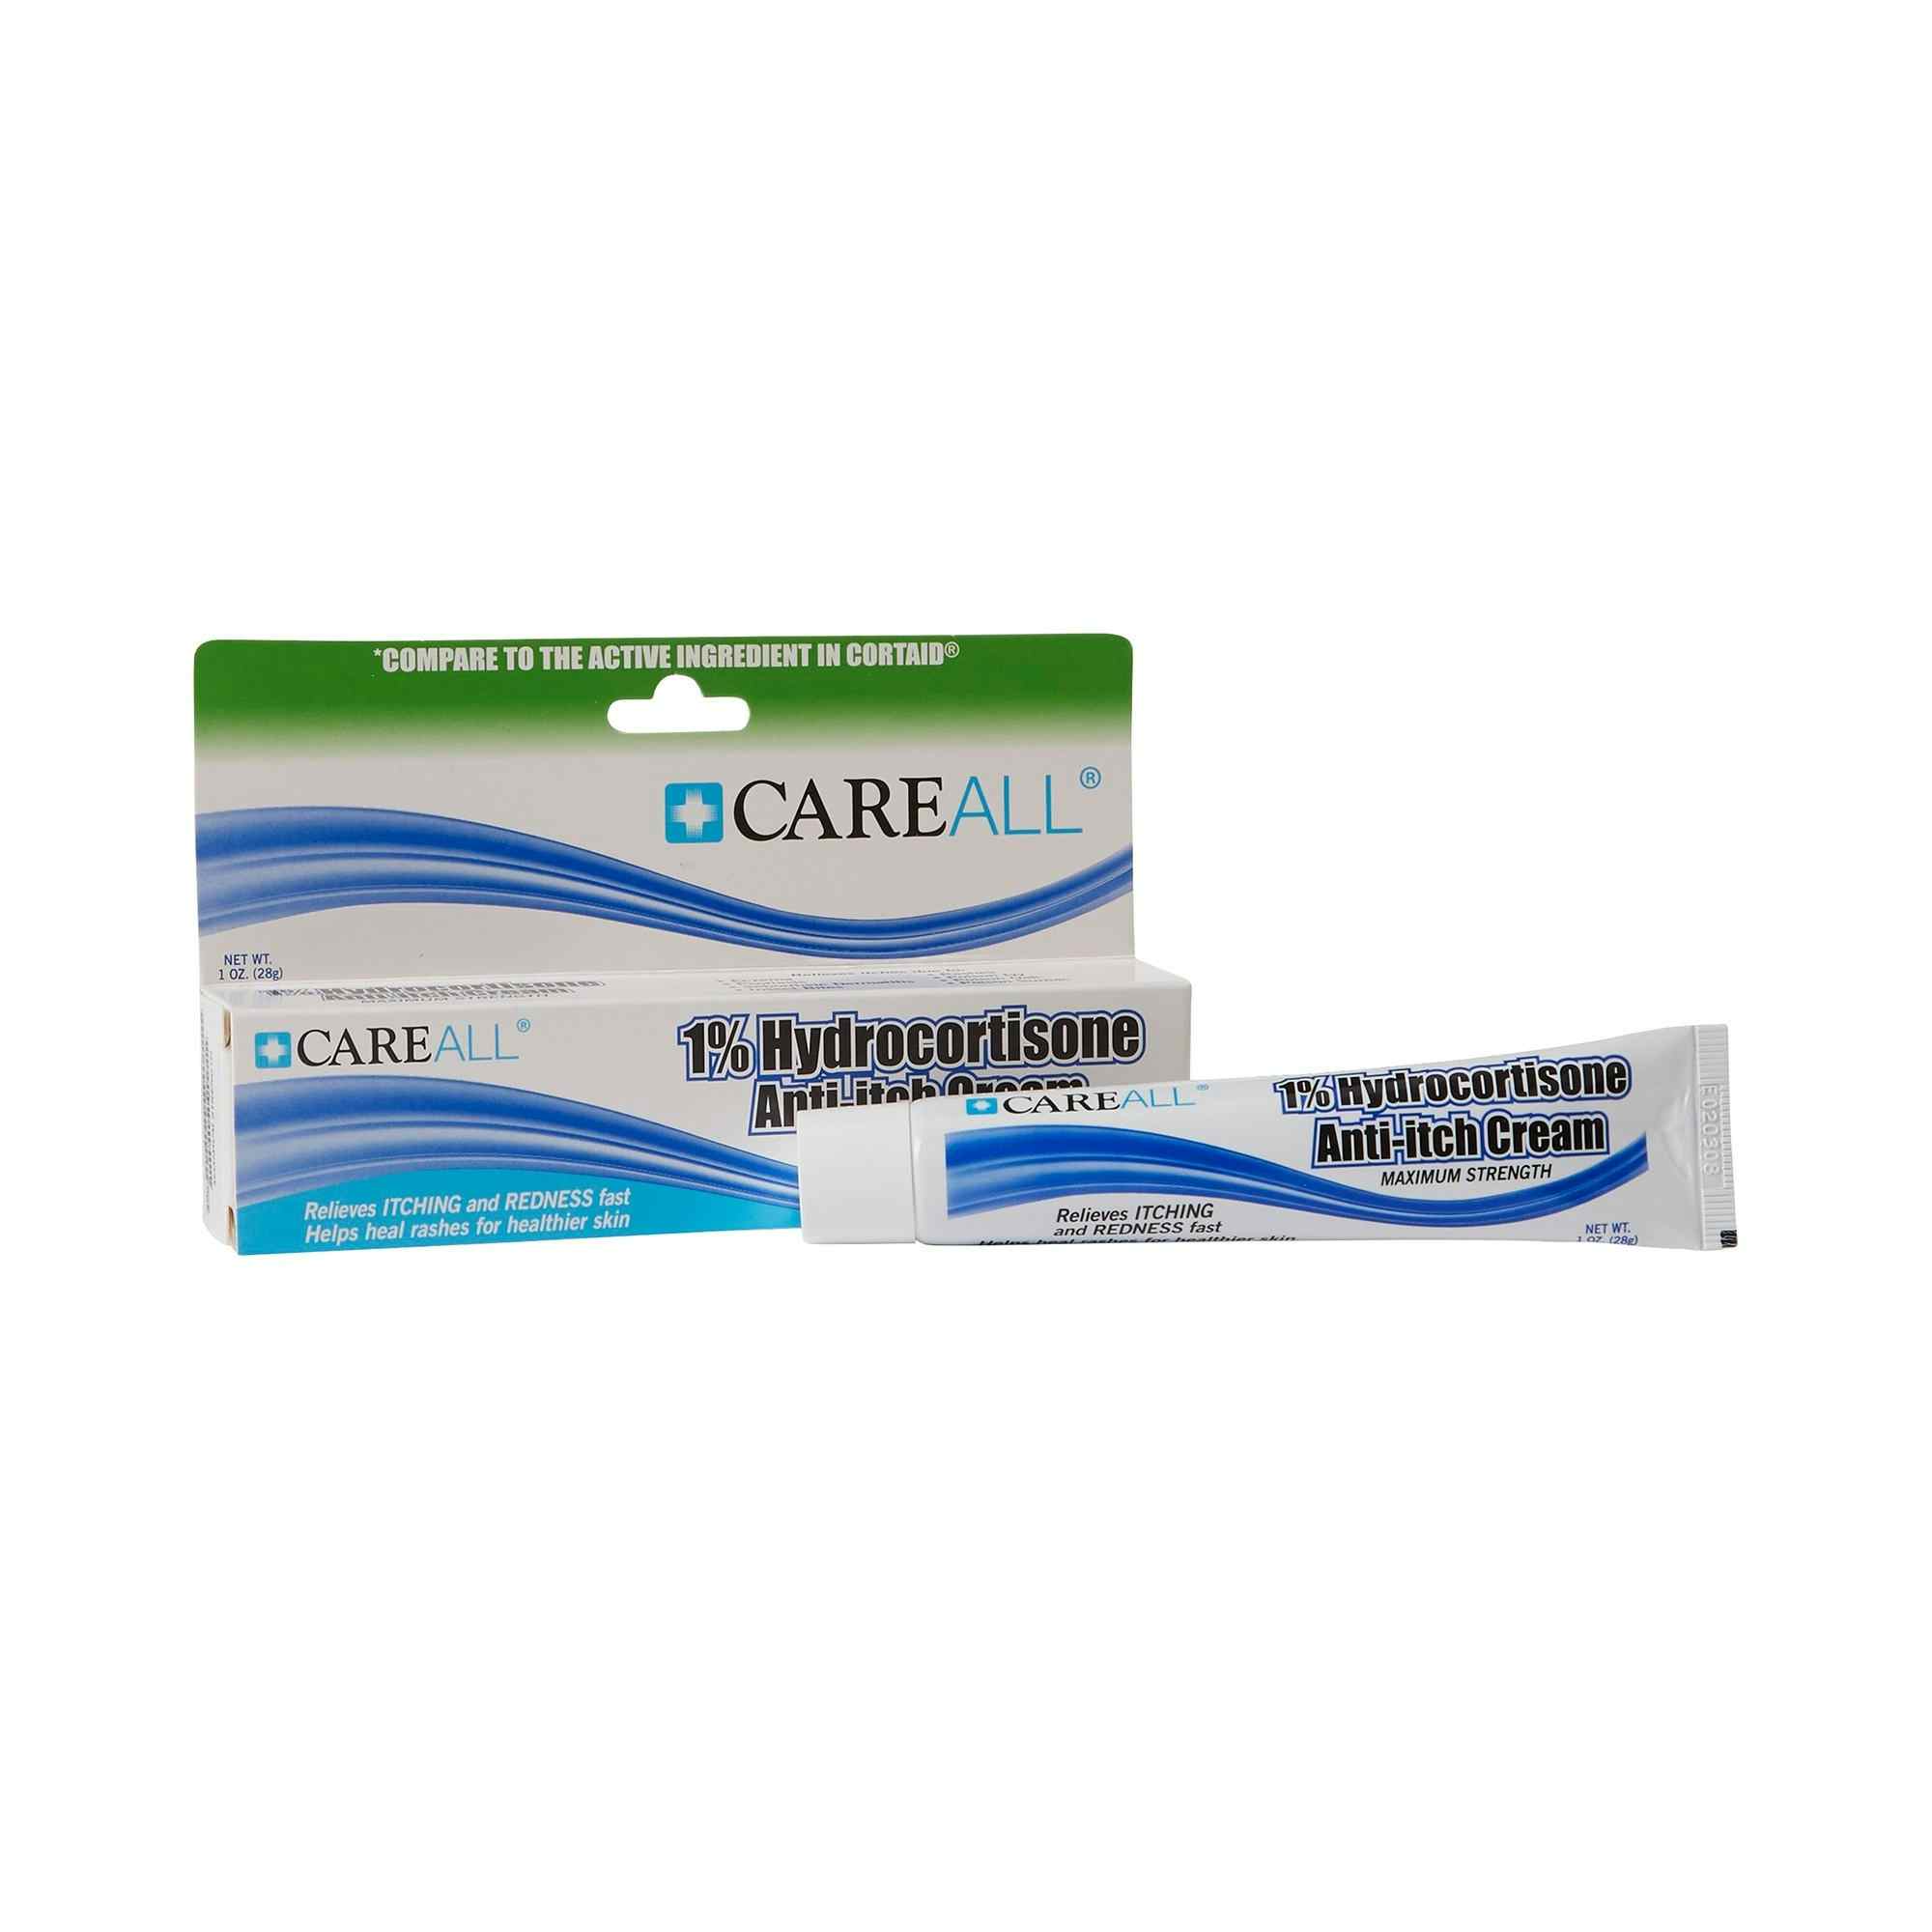 CareAll Maxium Strength 1% Hydrocortisone Anti-Itch Cream, HYD1, 1 Each